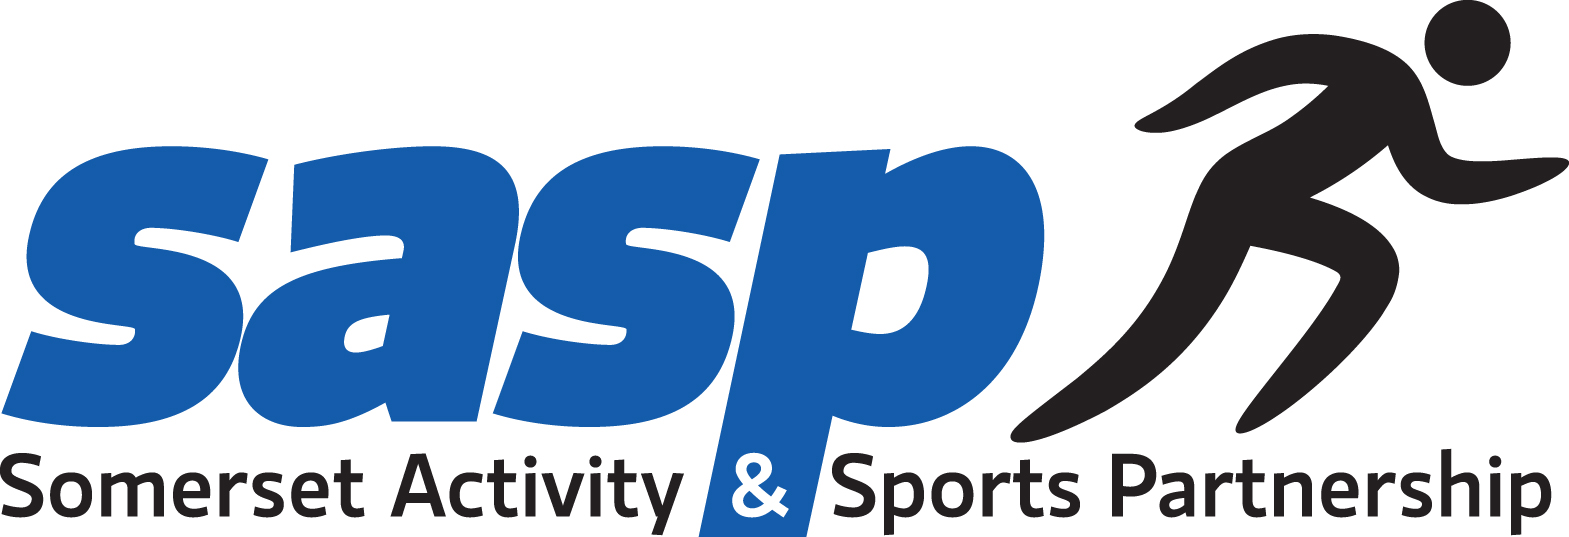 Somerset Activity & Sports Partnership